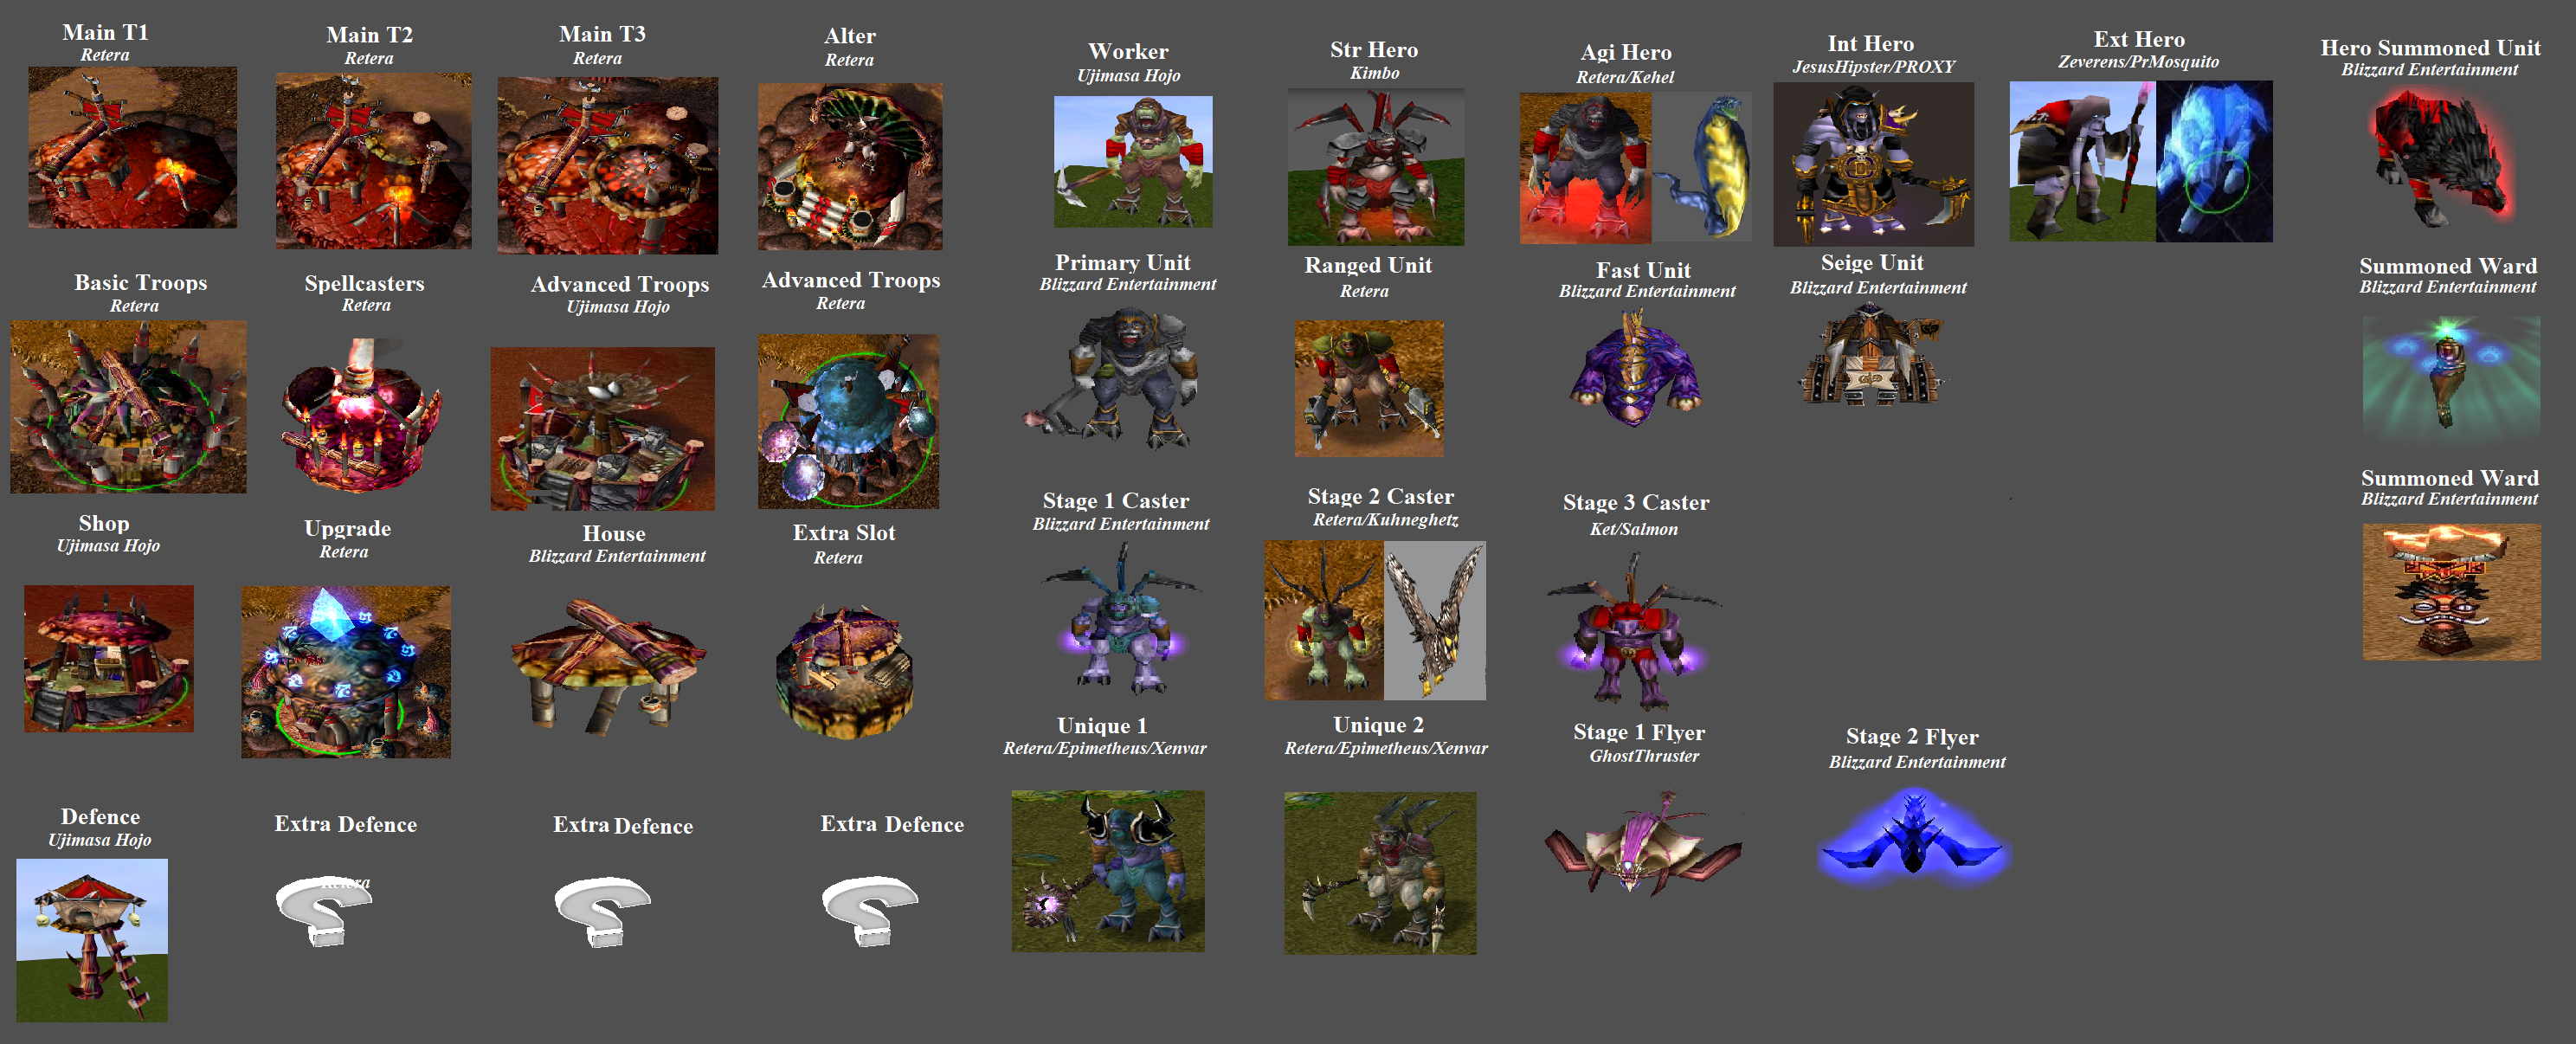 Warcraft 3 Race Mod - Broken Draenei Concept Preview